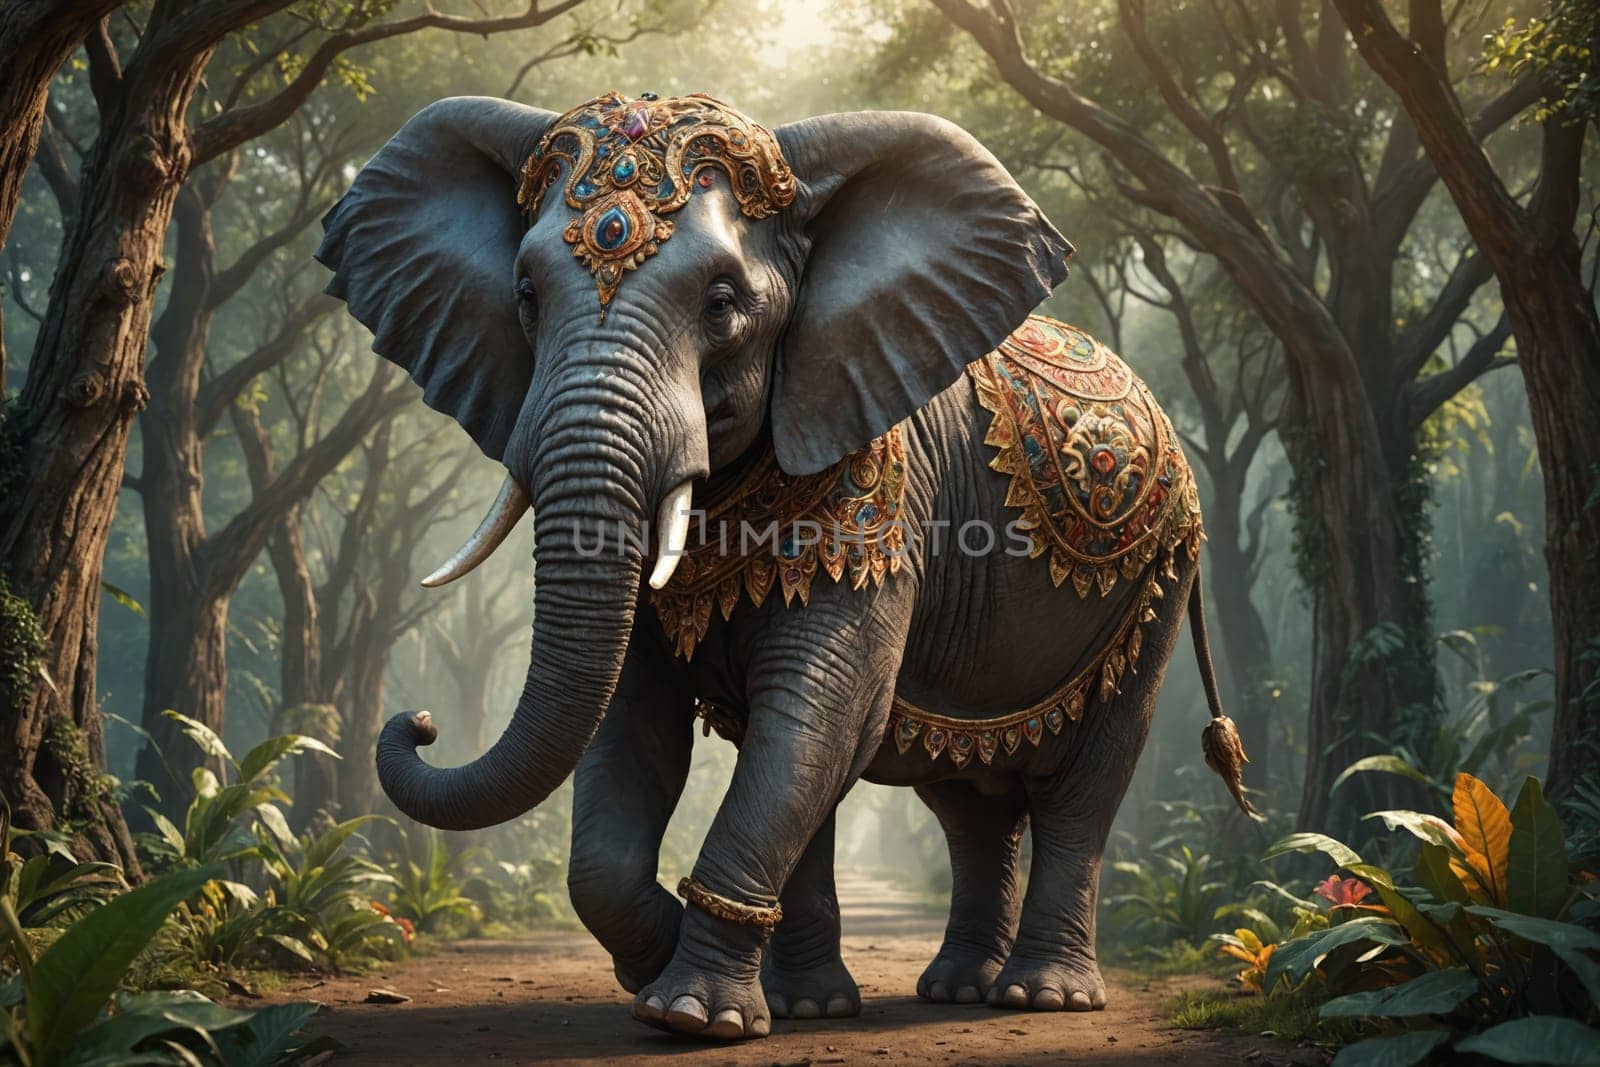 Witness the grandeur of African elephants moving across the savannah.